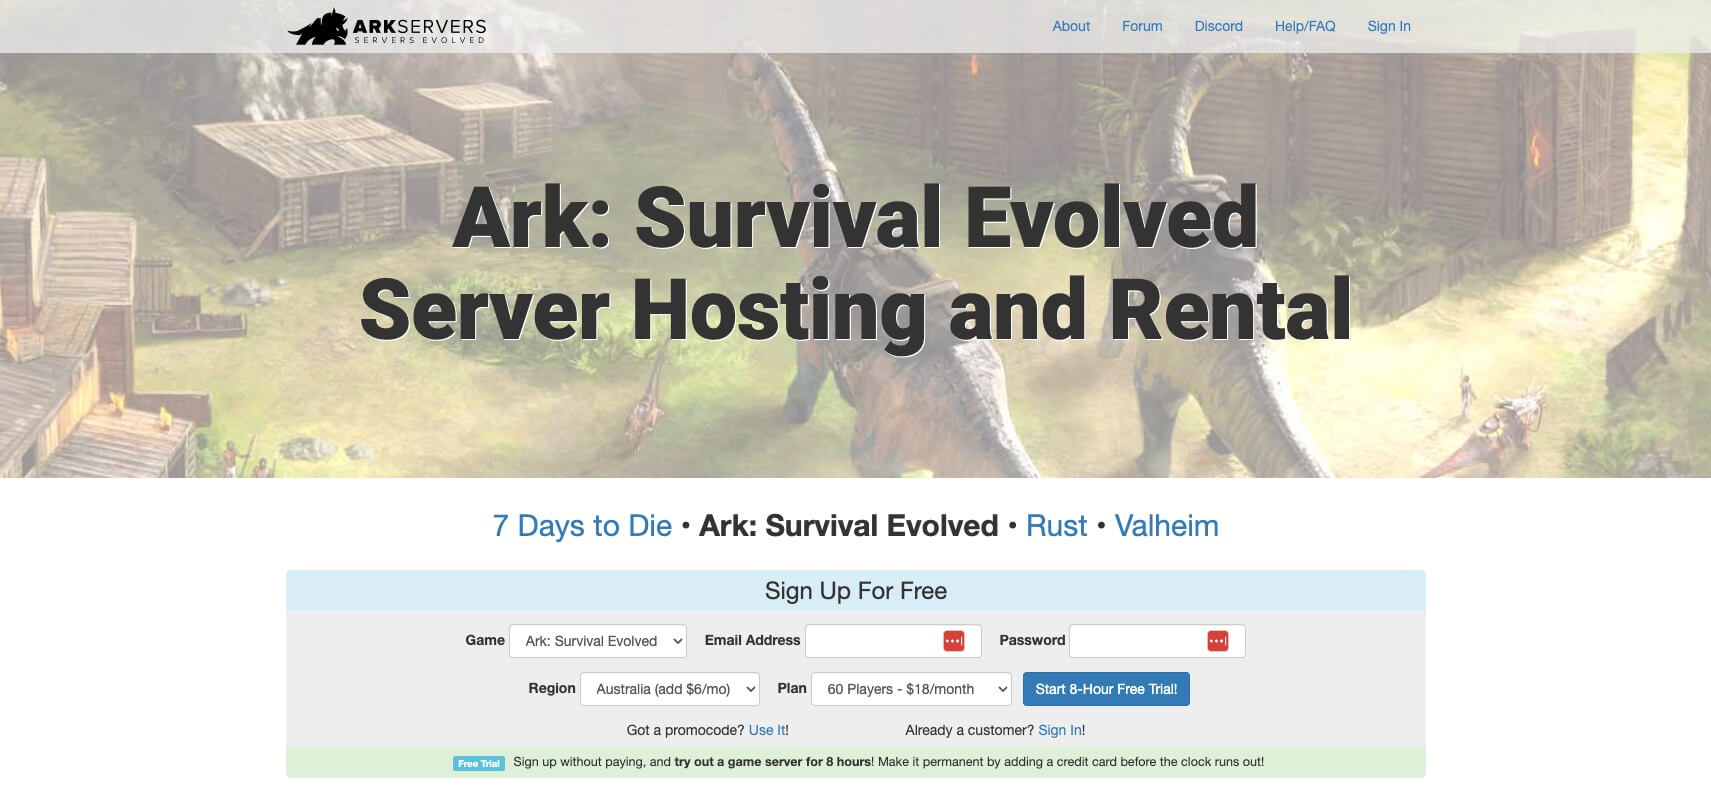 Ark-Survival-Evolved-Server-Hosting-and-Rental-ArkServers-io-https-arkservers-io-